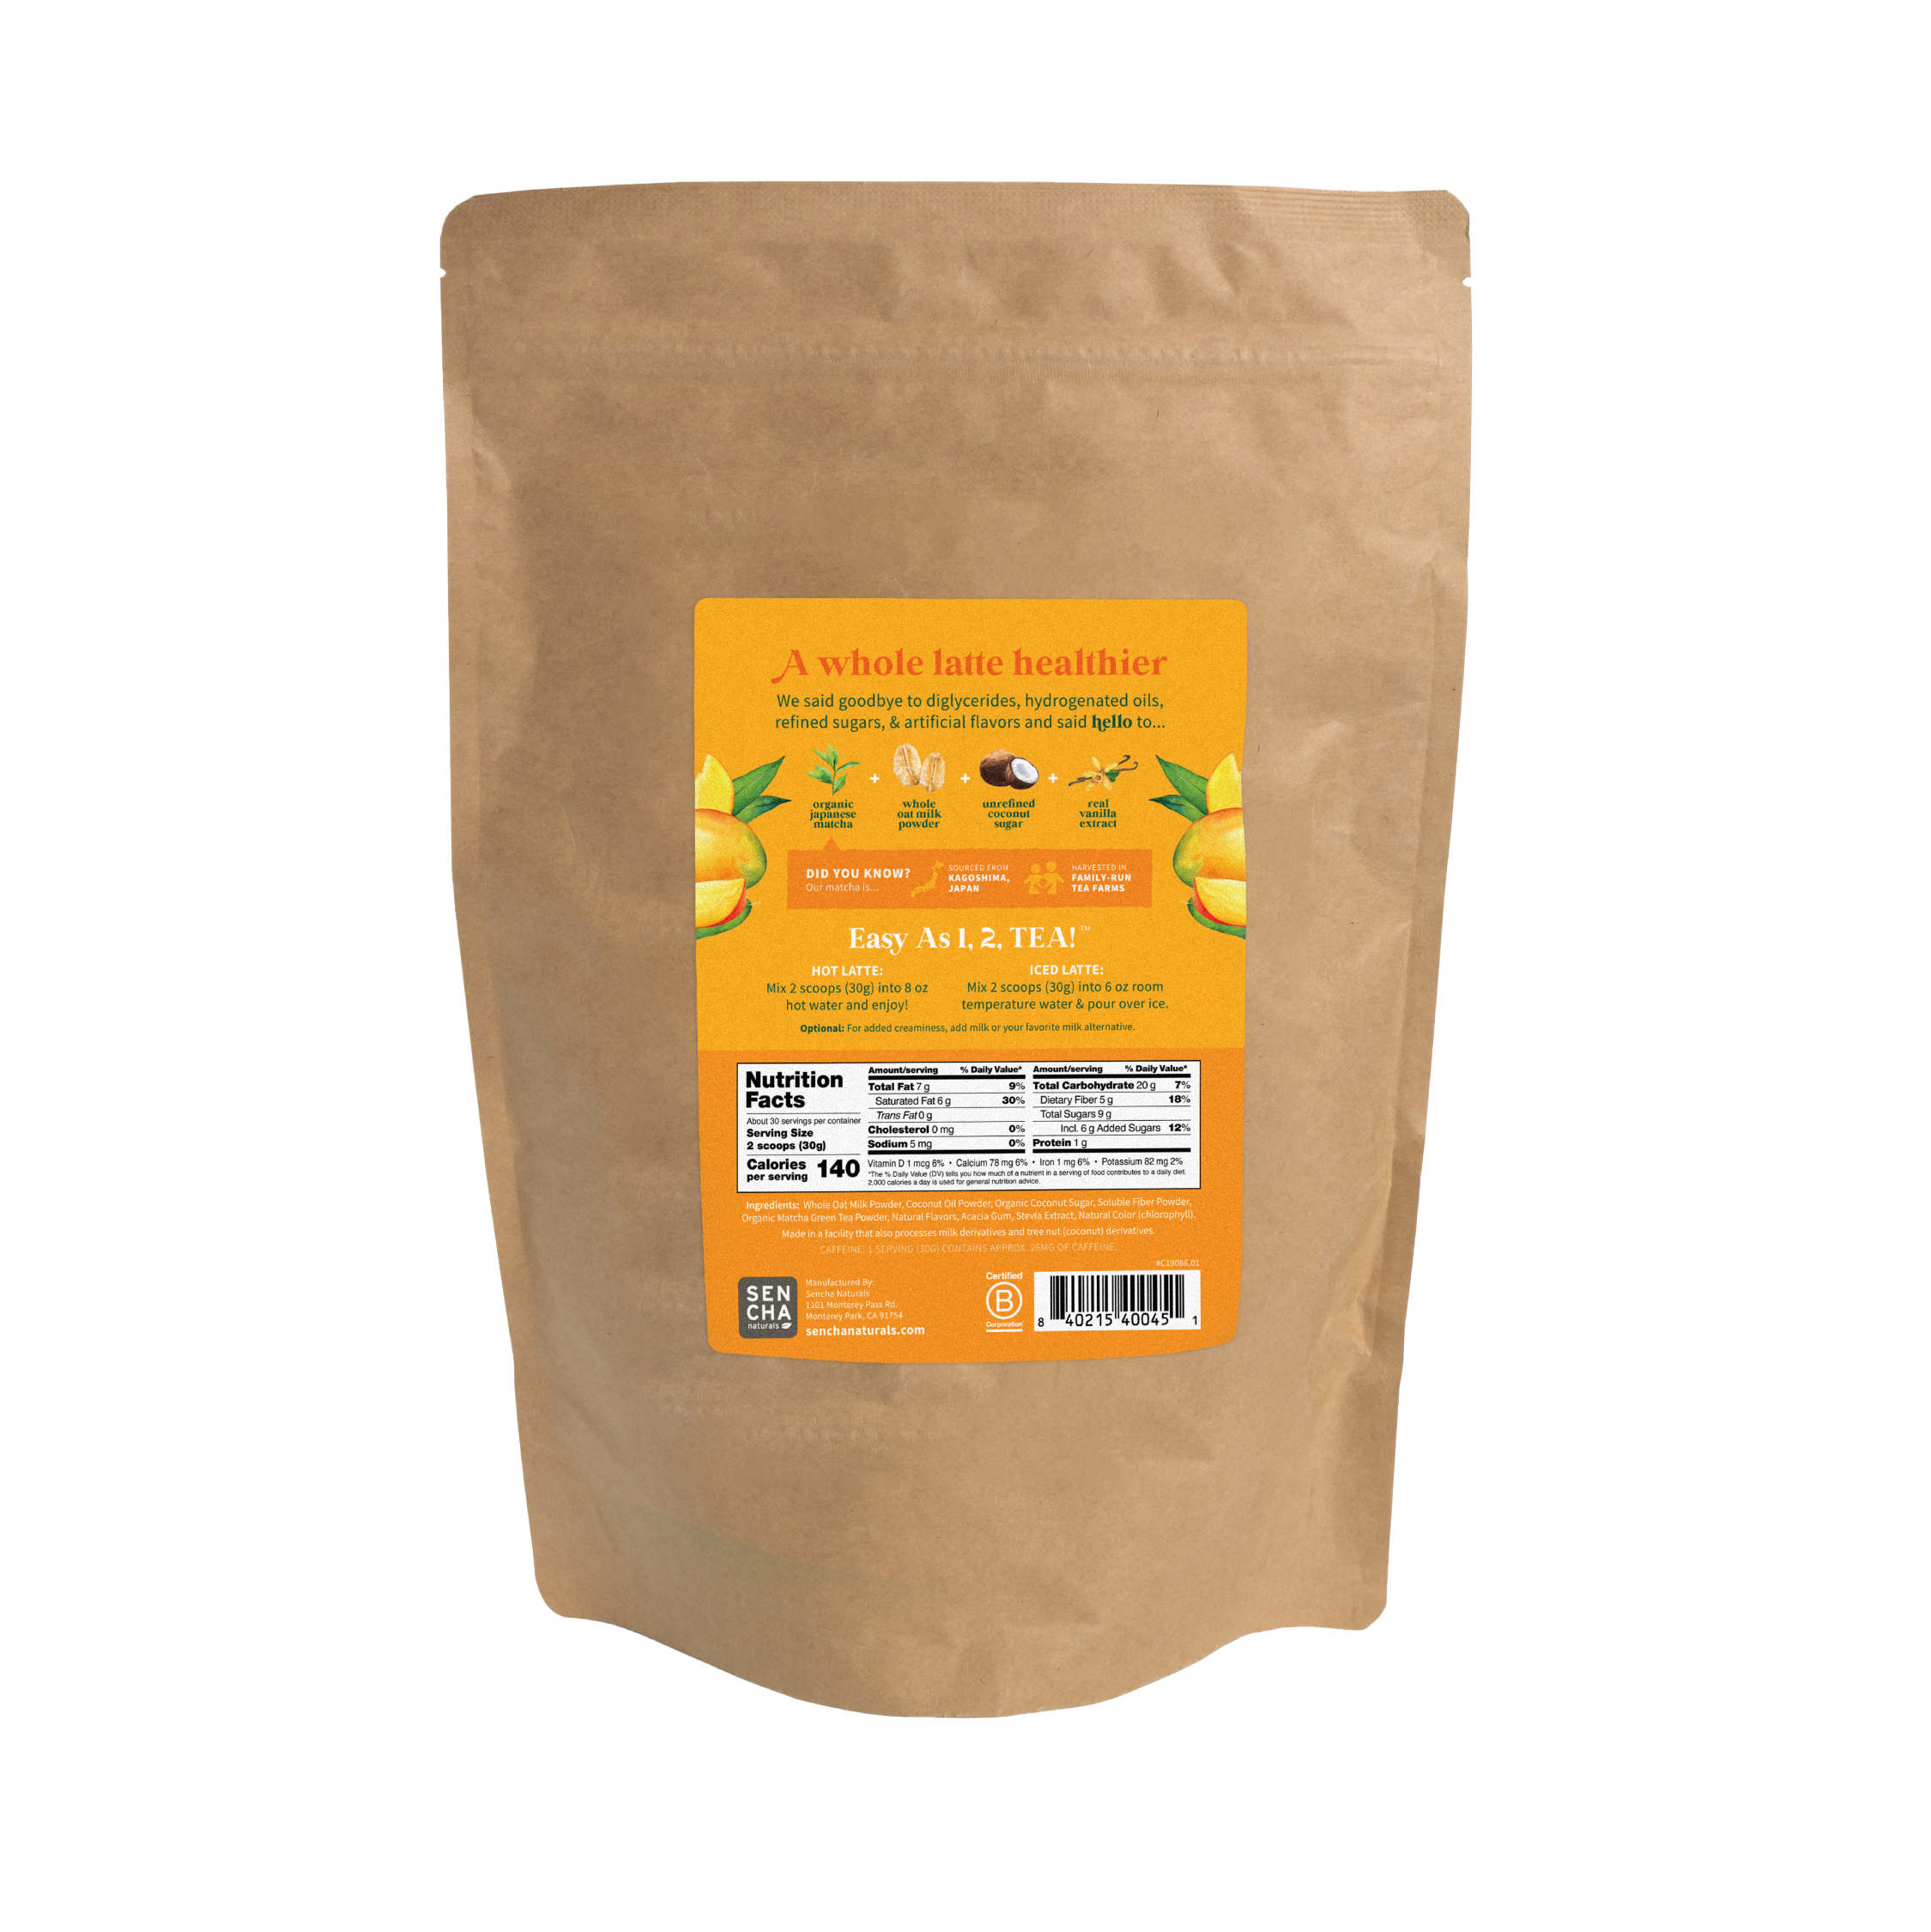 Matcha Latte - Tropical Mango | 2 lb Bag